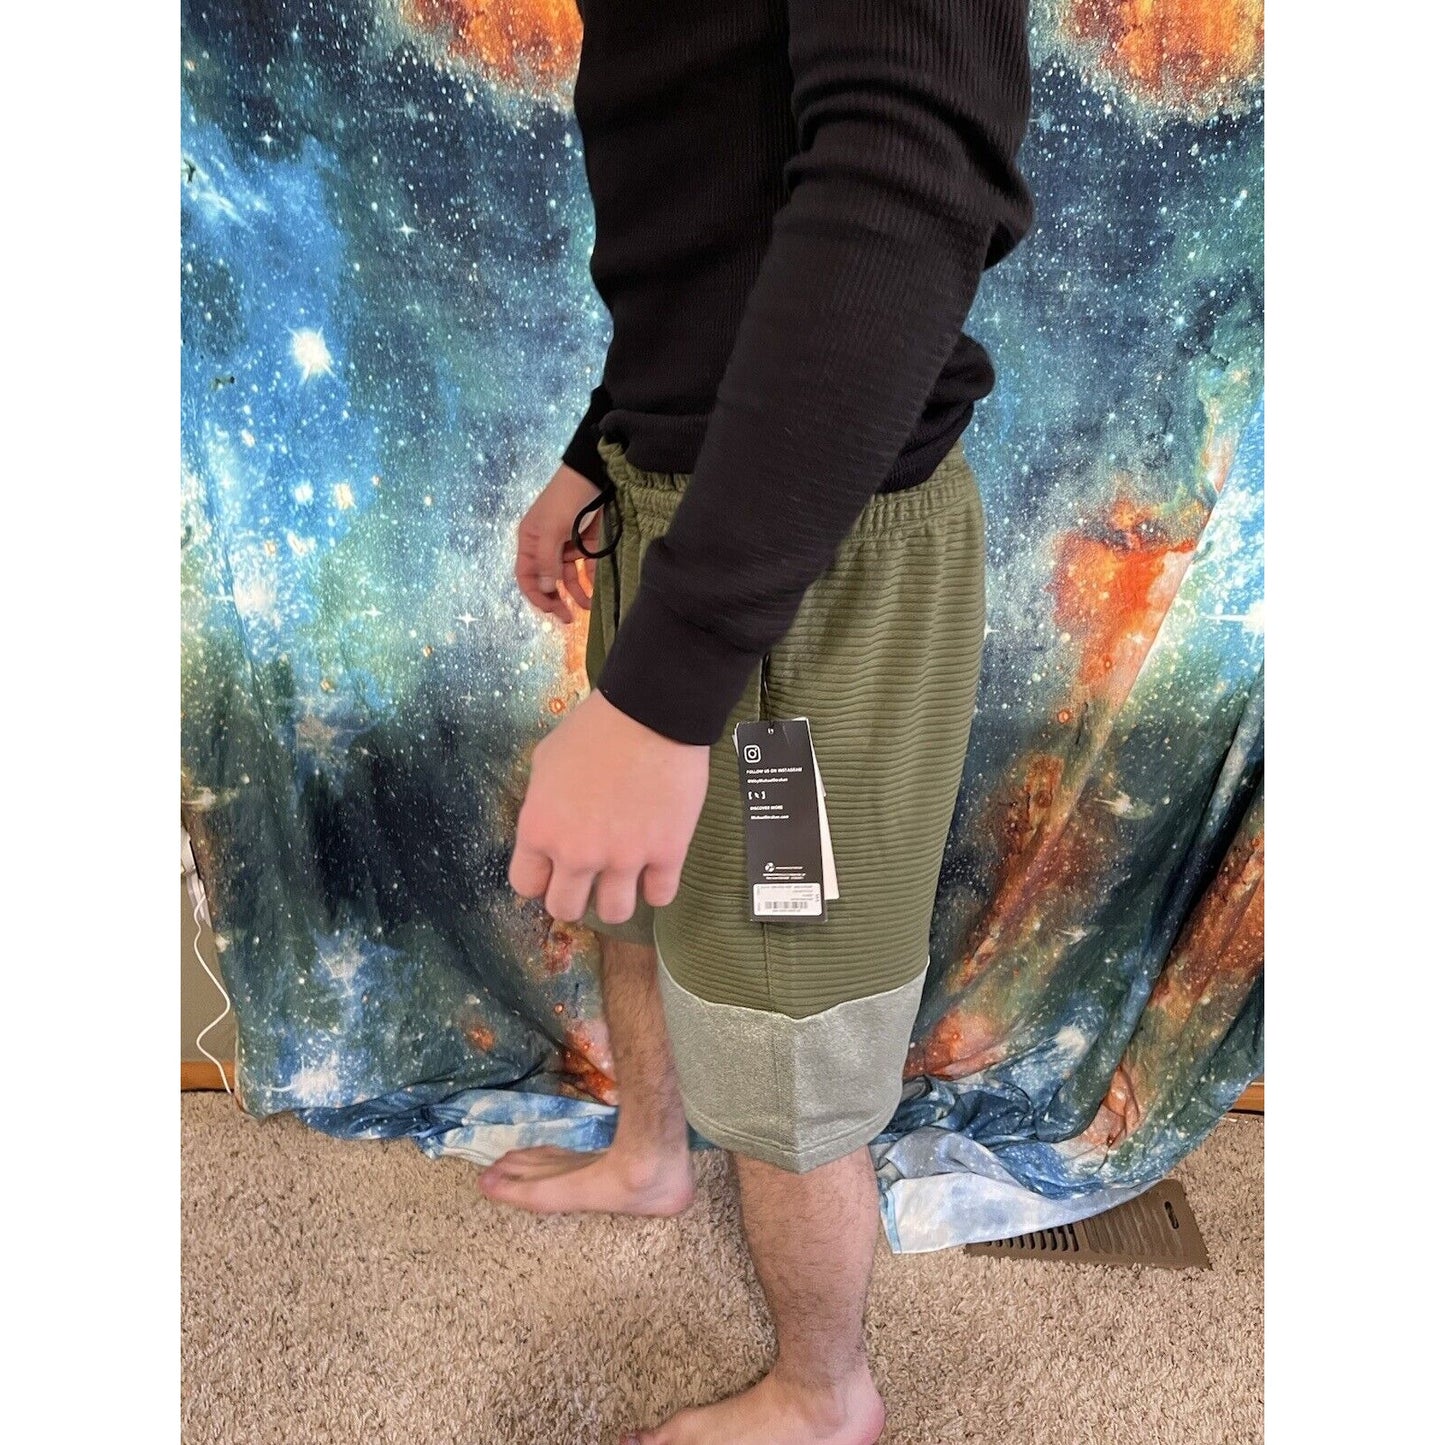 Michael Strahan Olive Green/gray Quick-Dri premium ultra fleece shorts XL